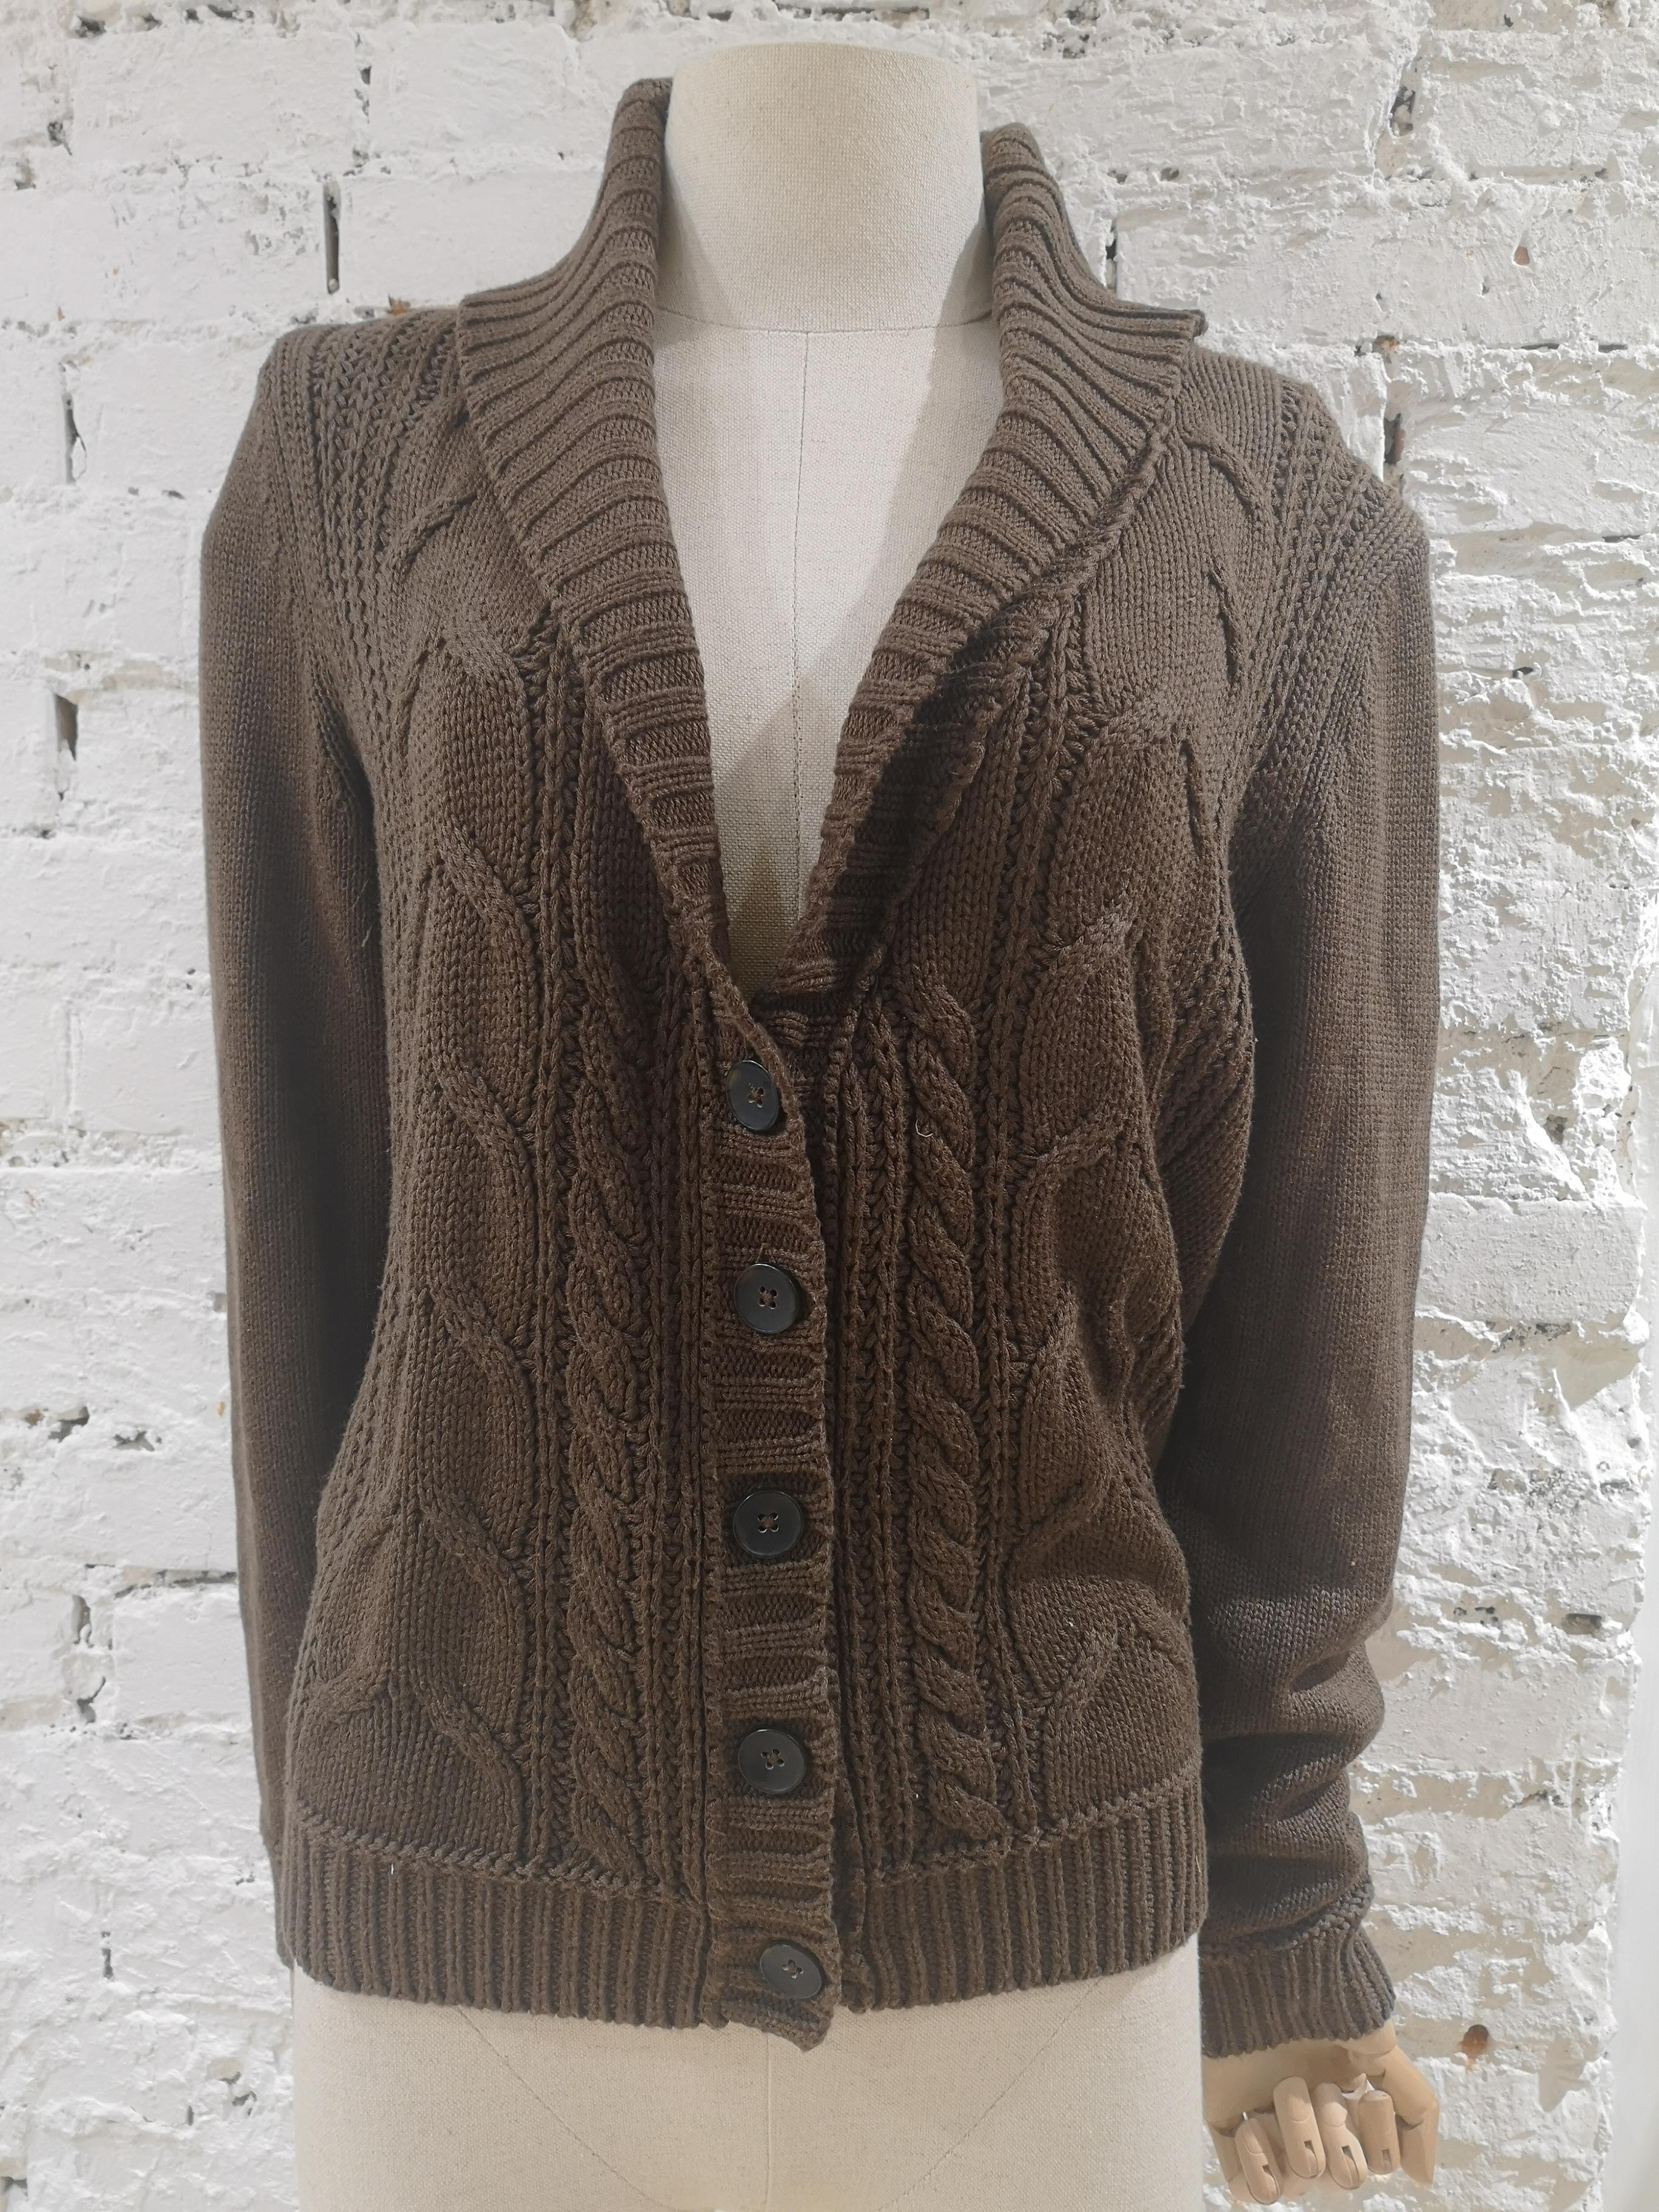 Esprit brown wool sweater / cardigan
Size M 